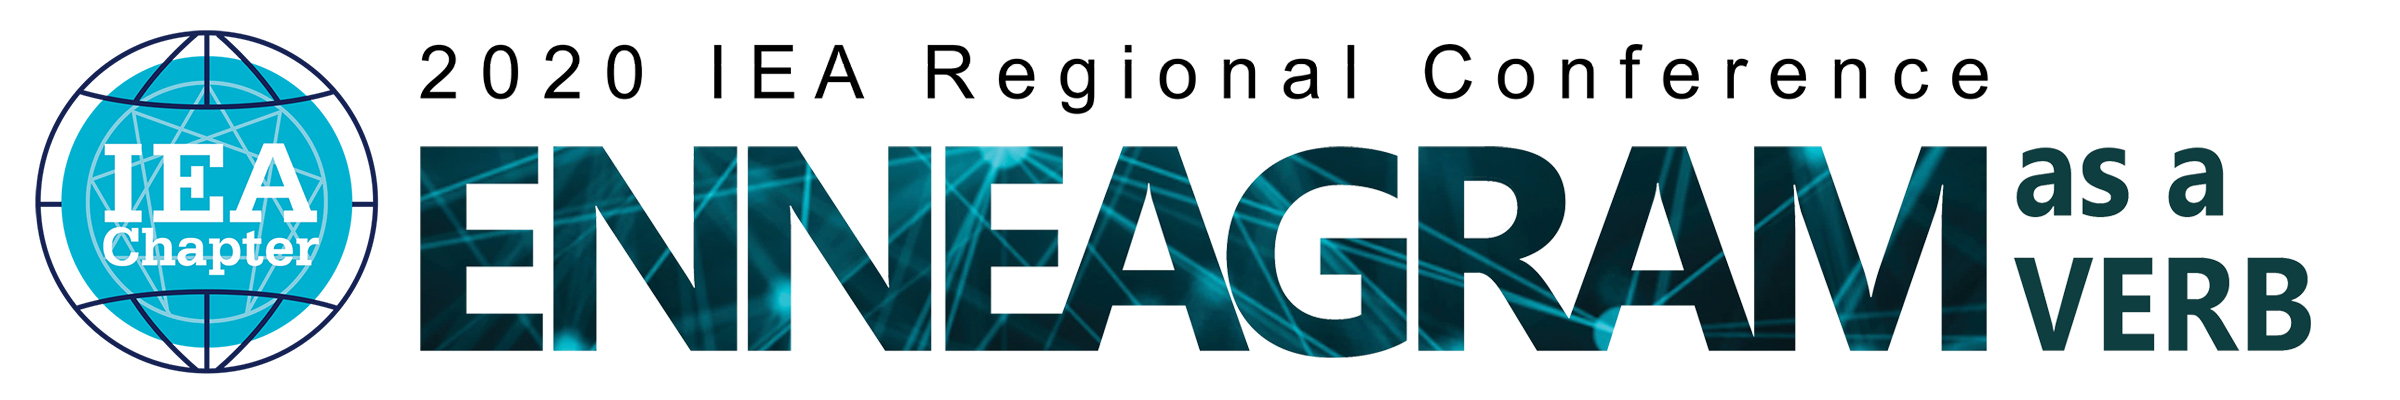 IEA_header_logo